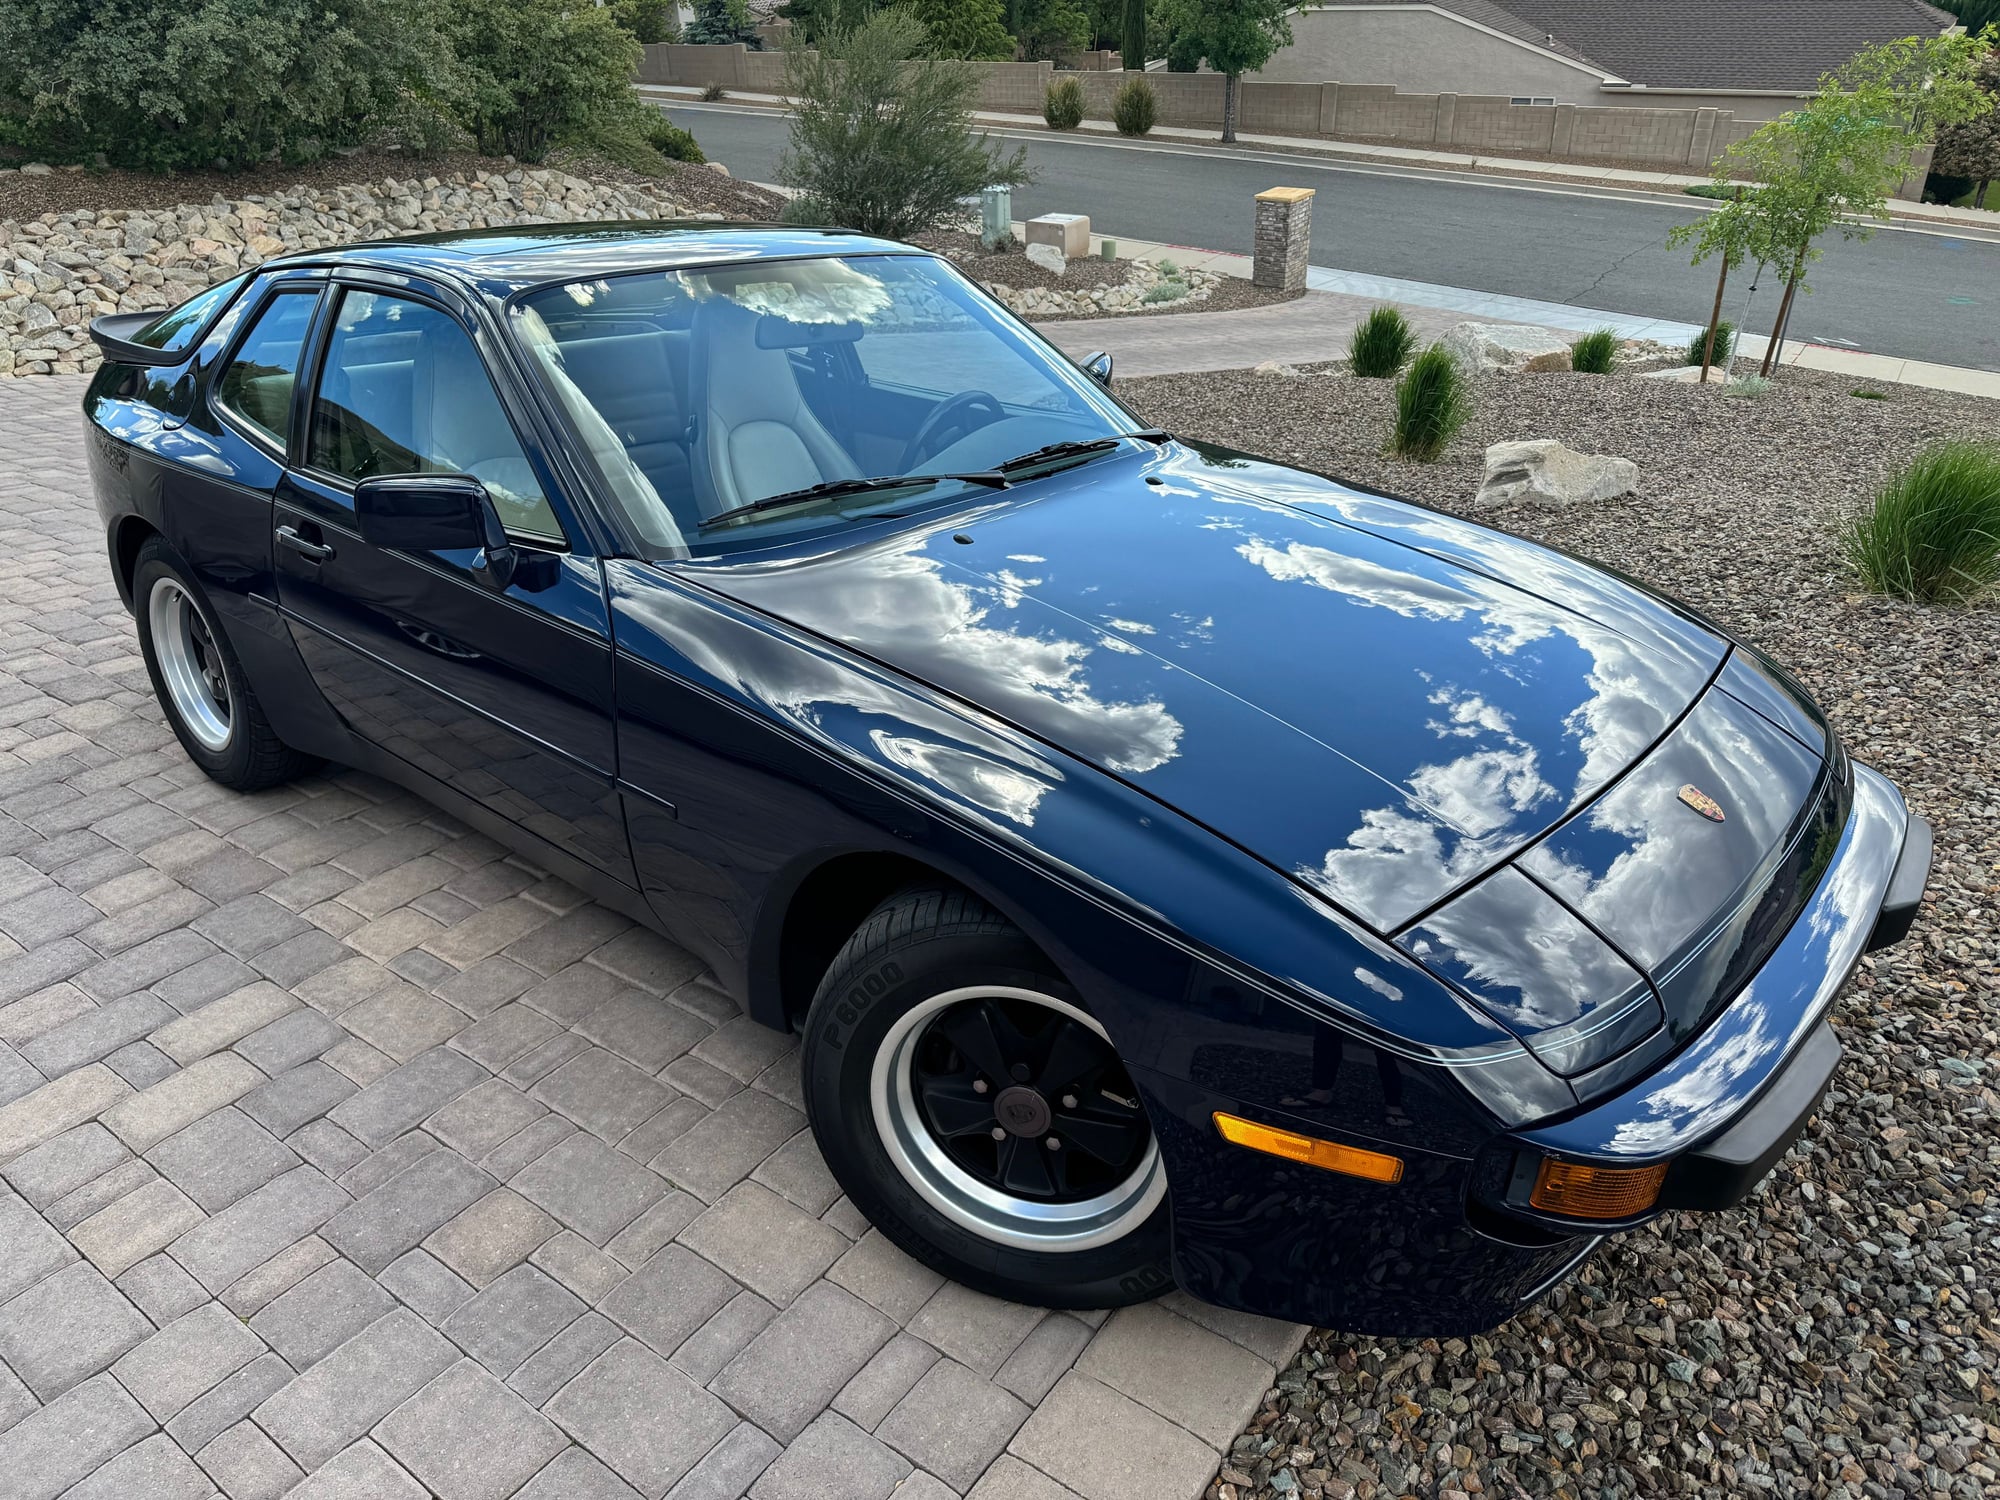 1985 Porsche 944 - 1985.5 Porsche 944 - 18K Mile, Single Family Time Capsule - Copenhagen Blue/Cream - Used - Prescott Valley, AZ 86314, United States